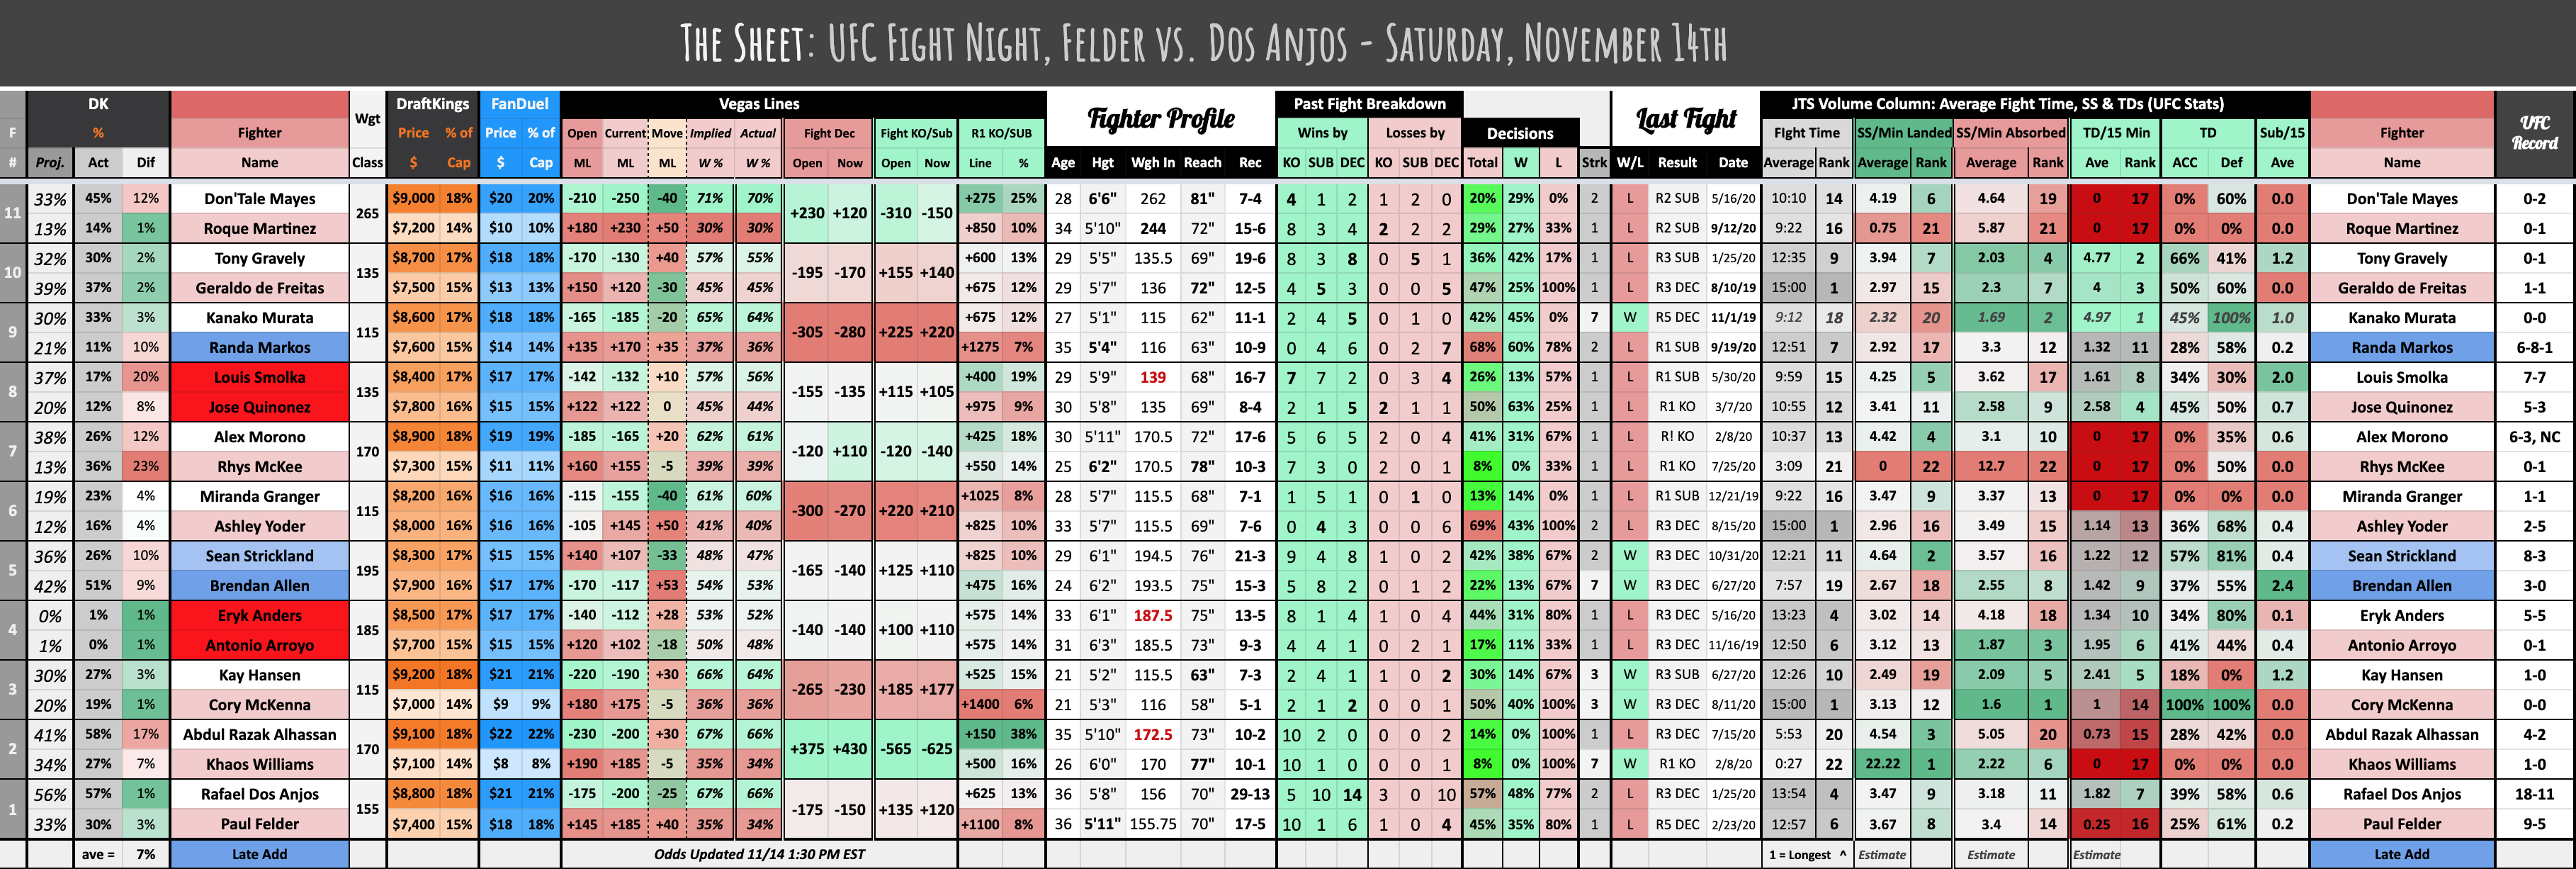 The Sheet: UFC Fight Night, Felder vs. Dos Anjos - Saturday, November 14th